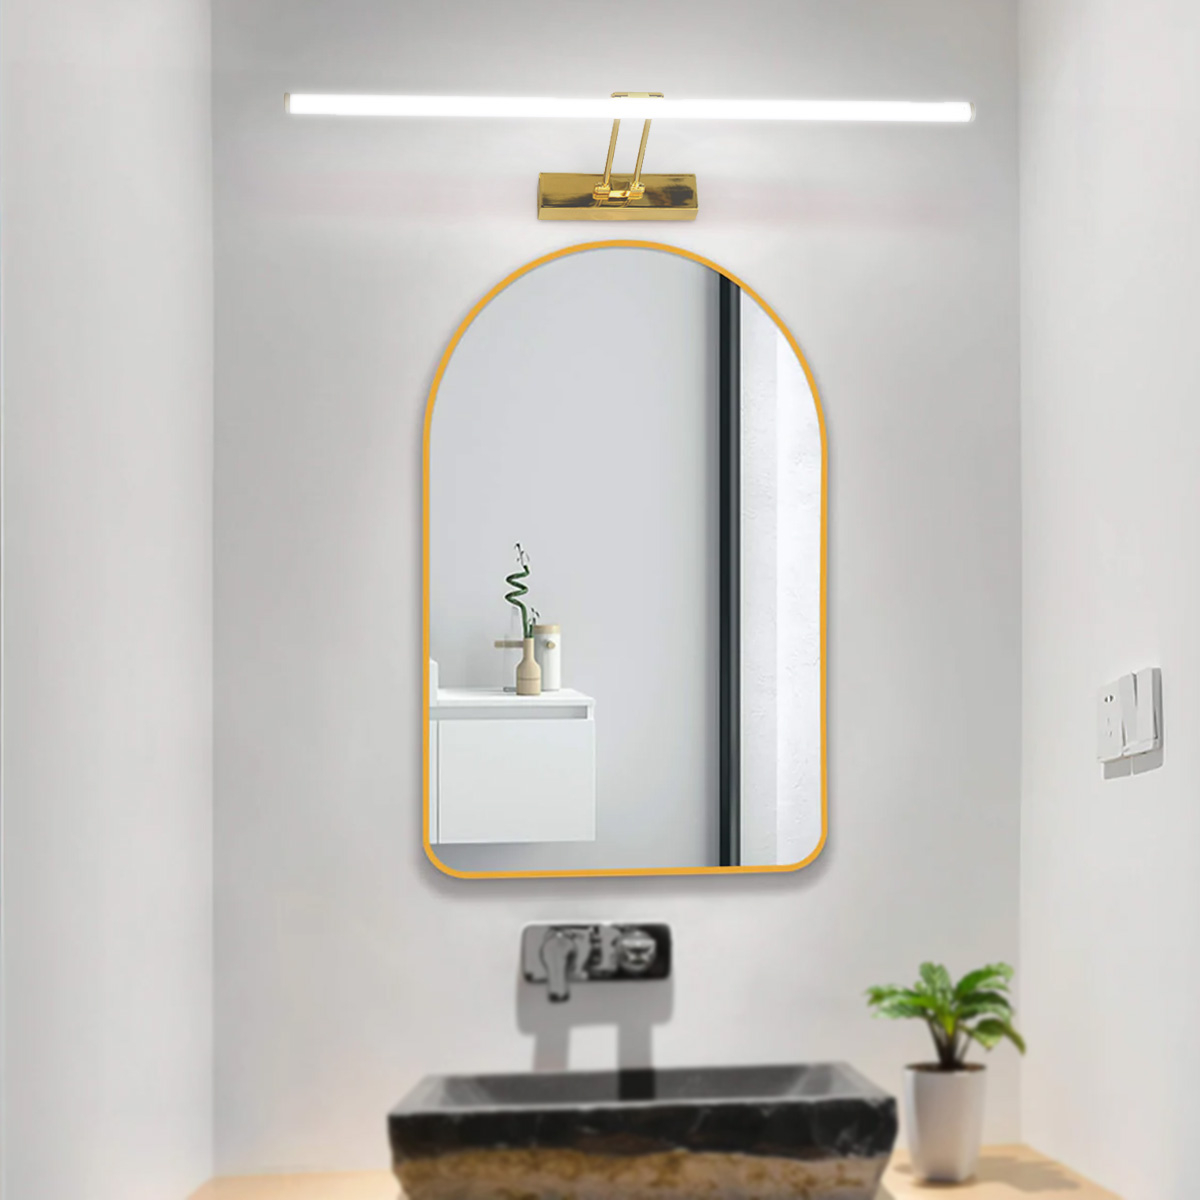 LED Mirror Light / Picture Light 3000K Warm White - Gold